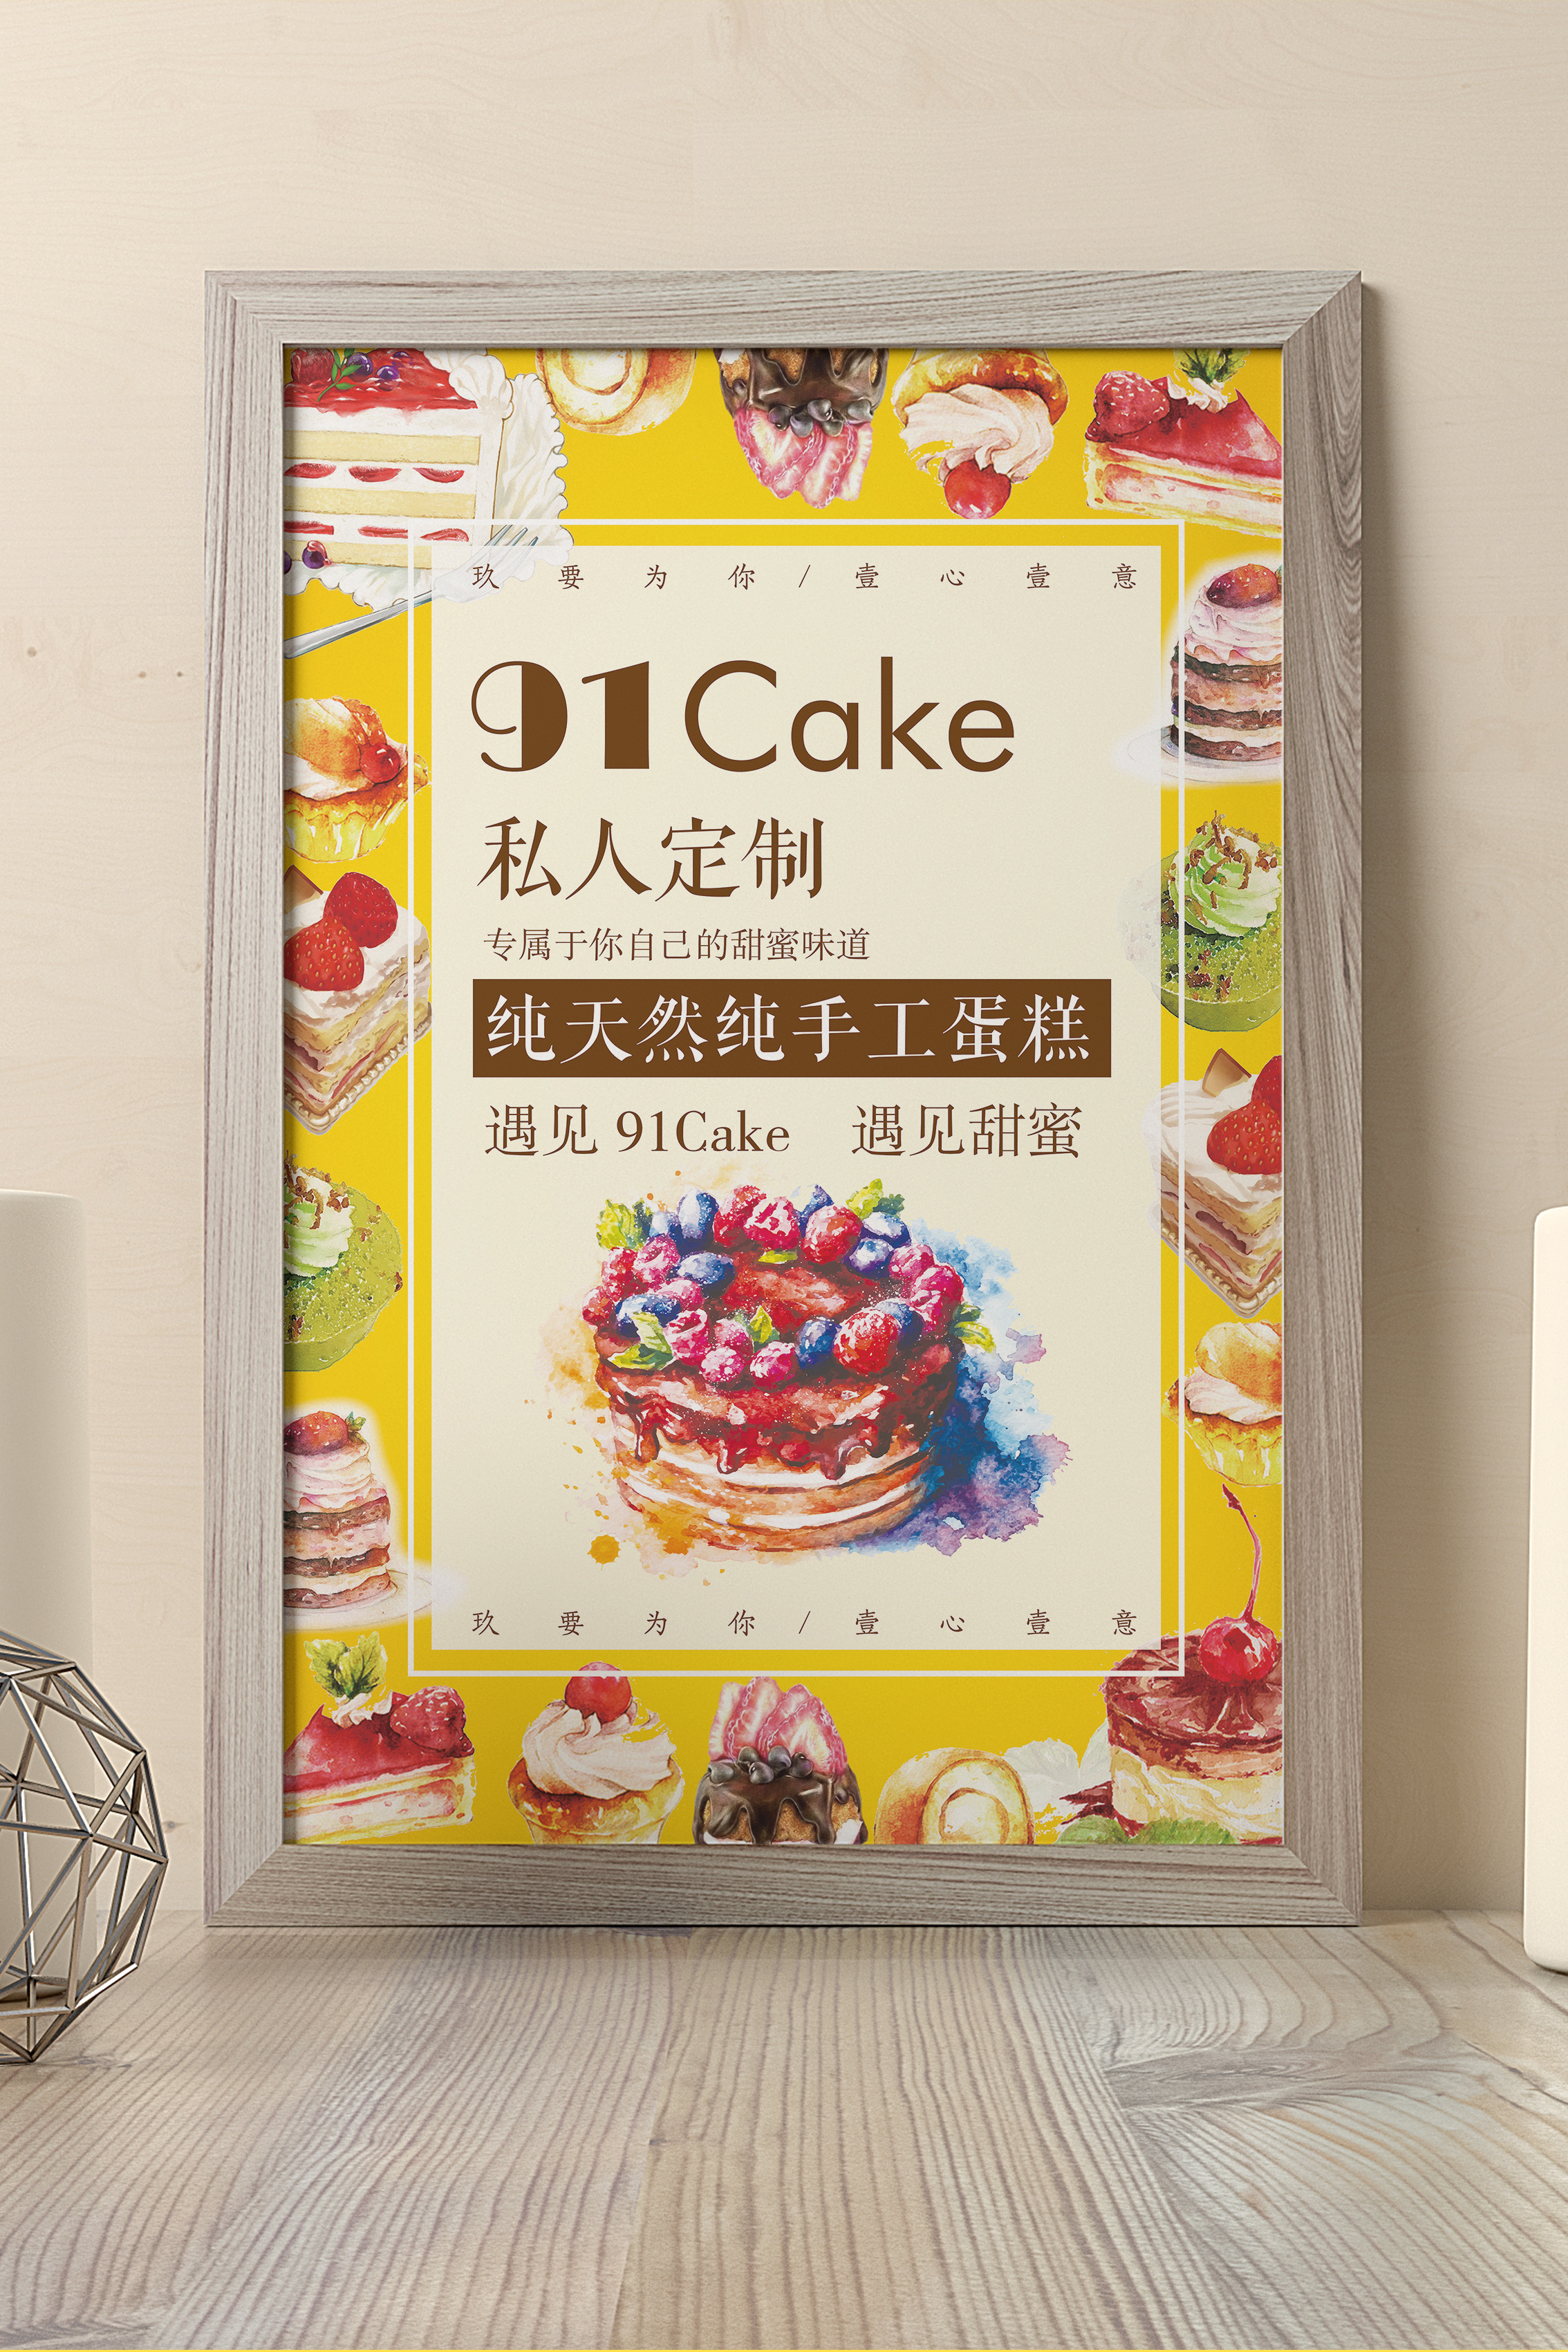 XX蛋糕门店海报宣传设计图__展板模板_广告设计_设计图库_昵图网nipic.com